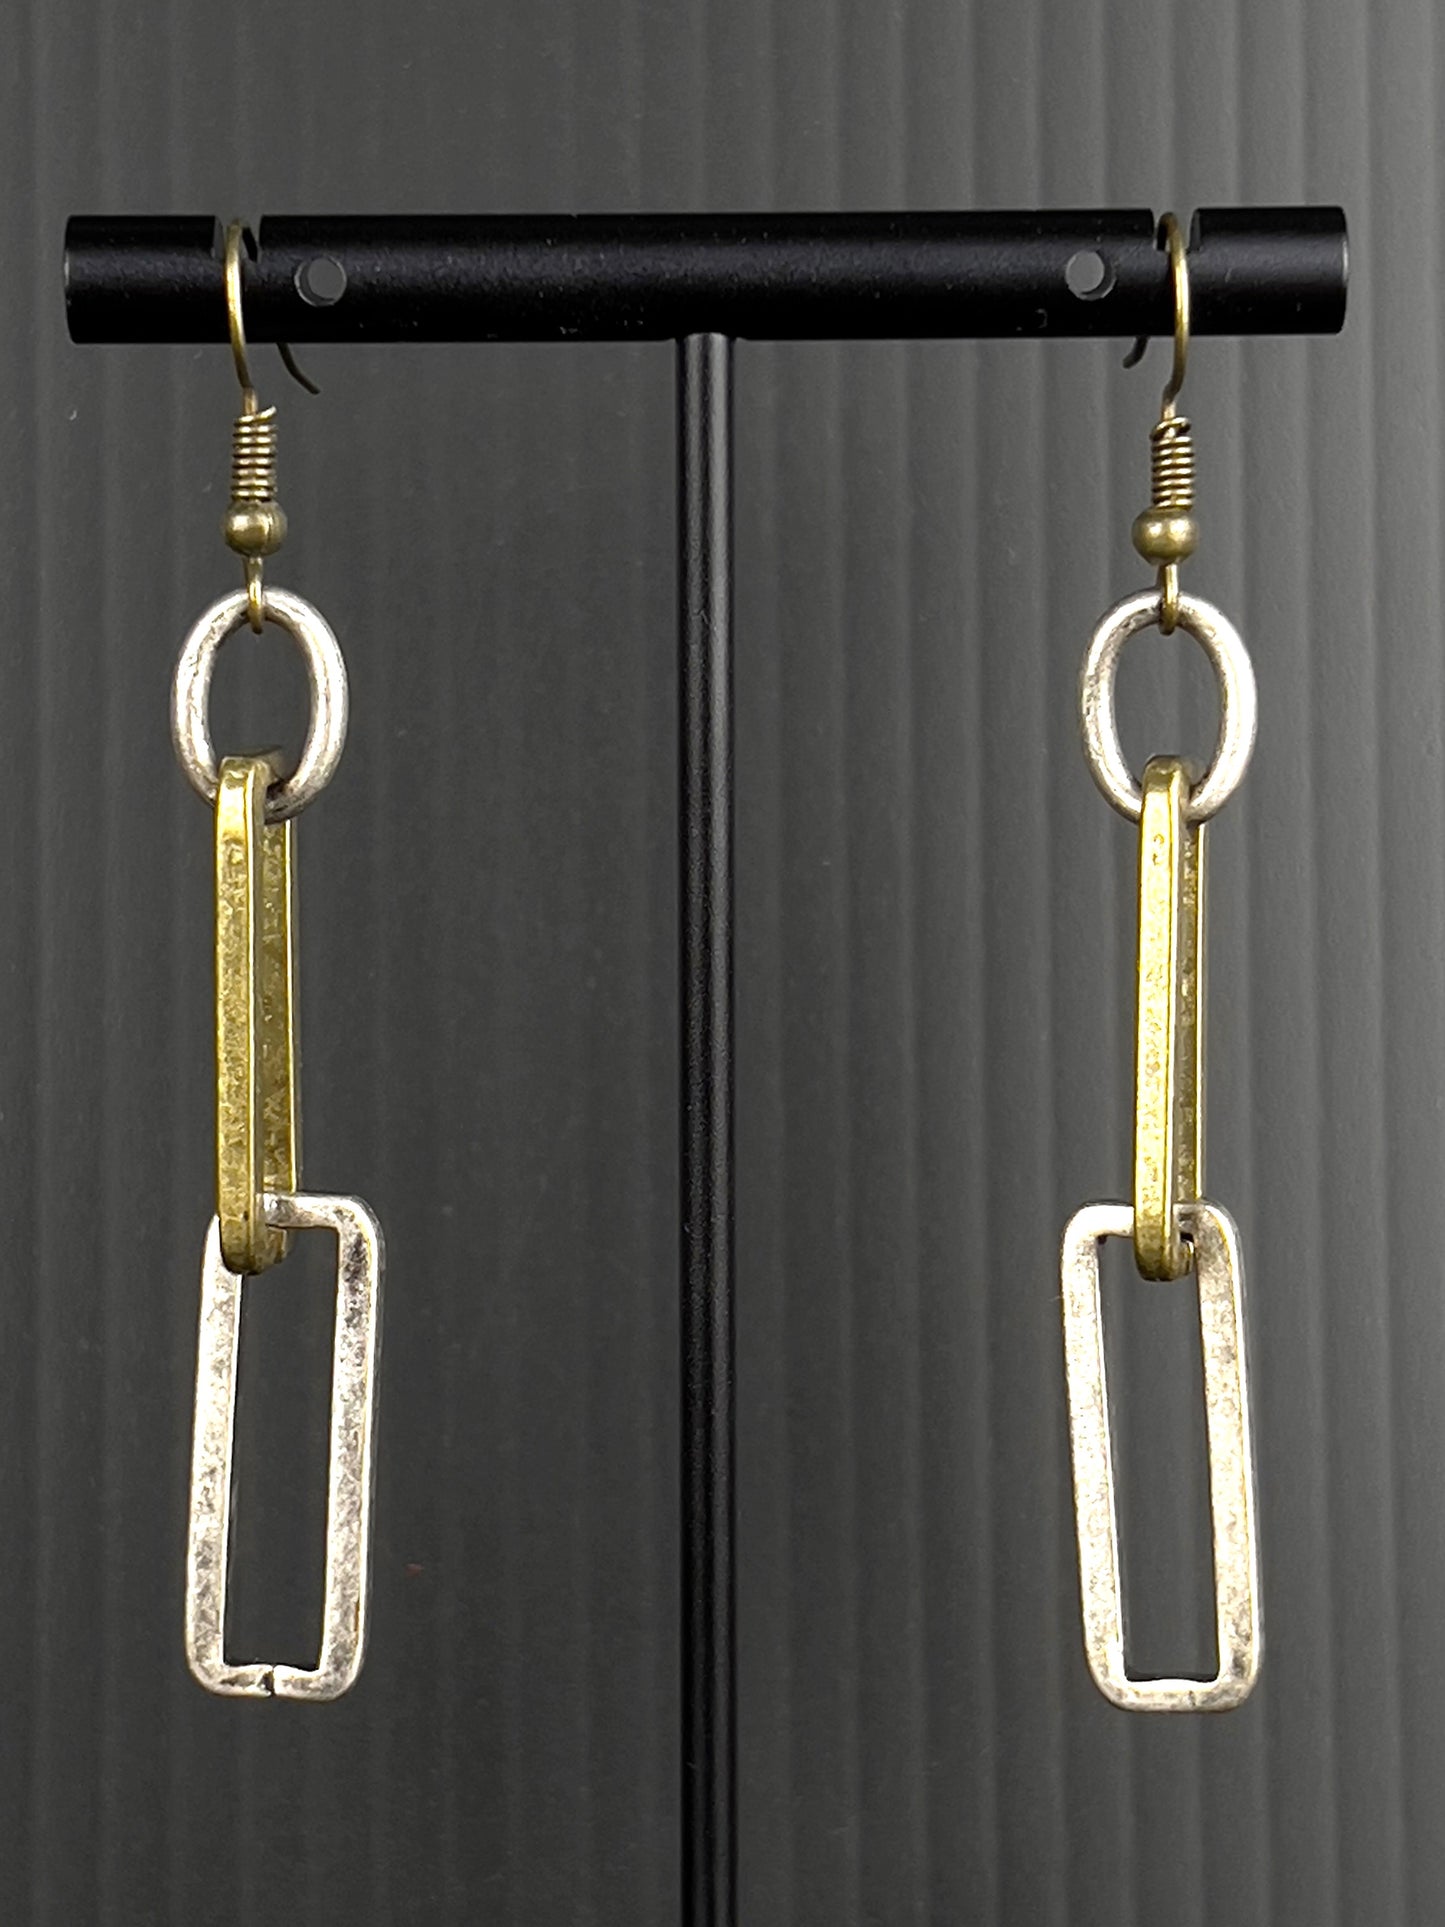 NSerena Jewelry-Trendy Link Earrings